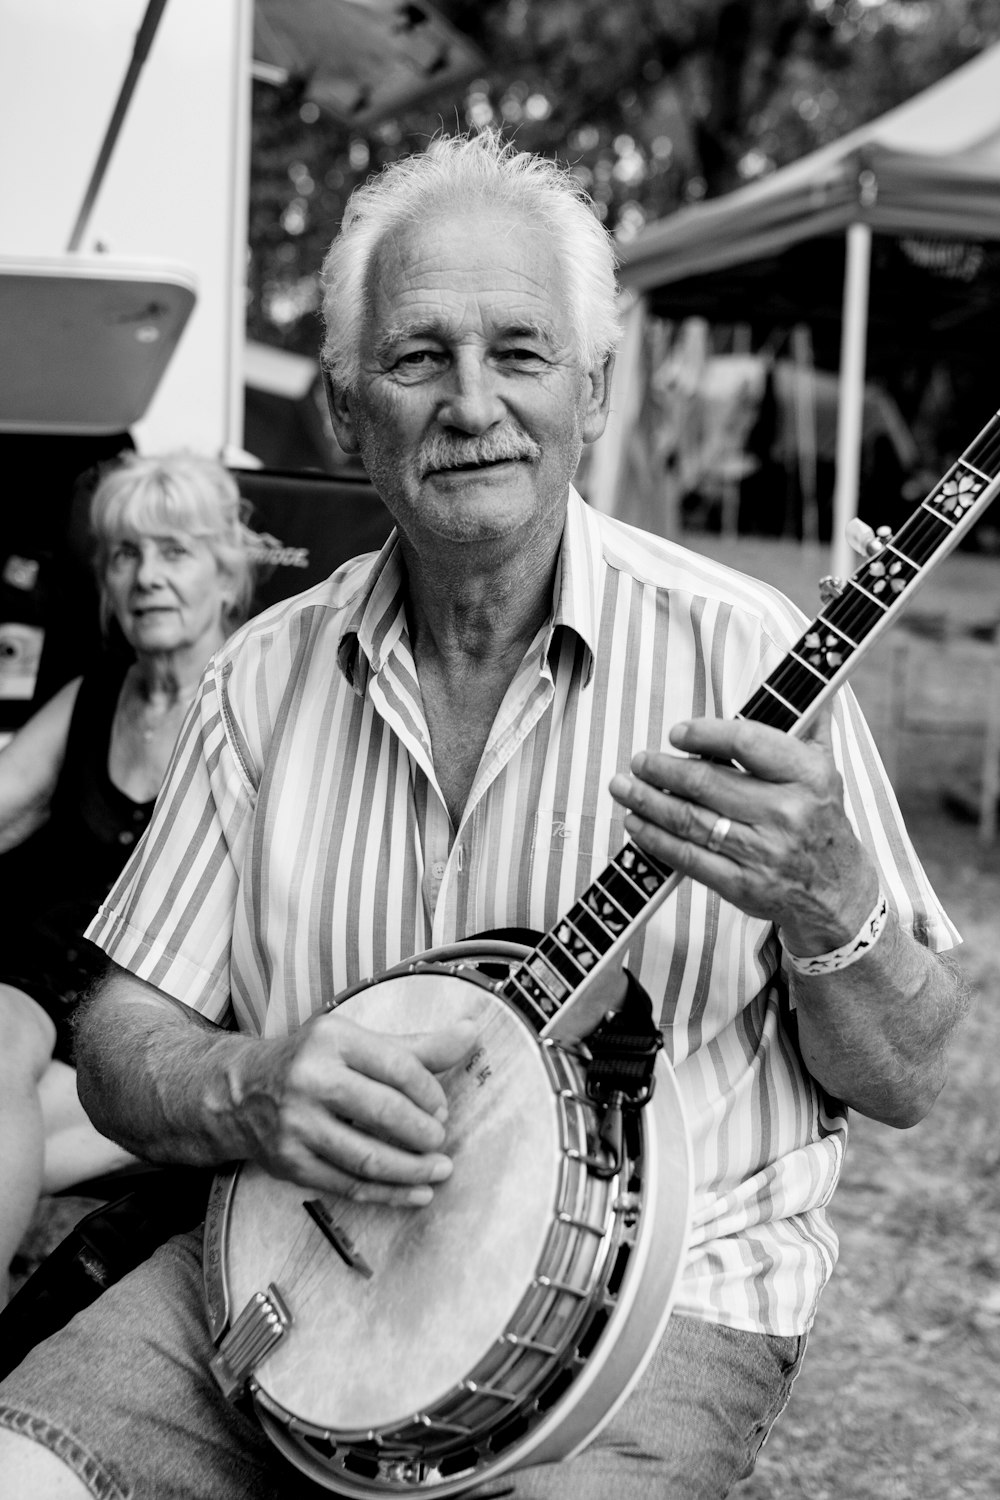 grayscale photo of man holding banjo